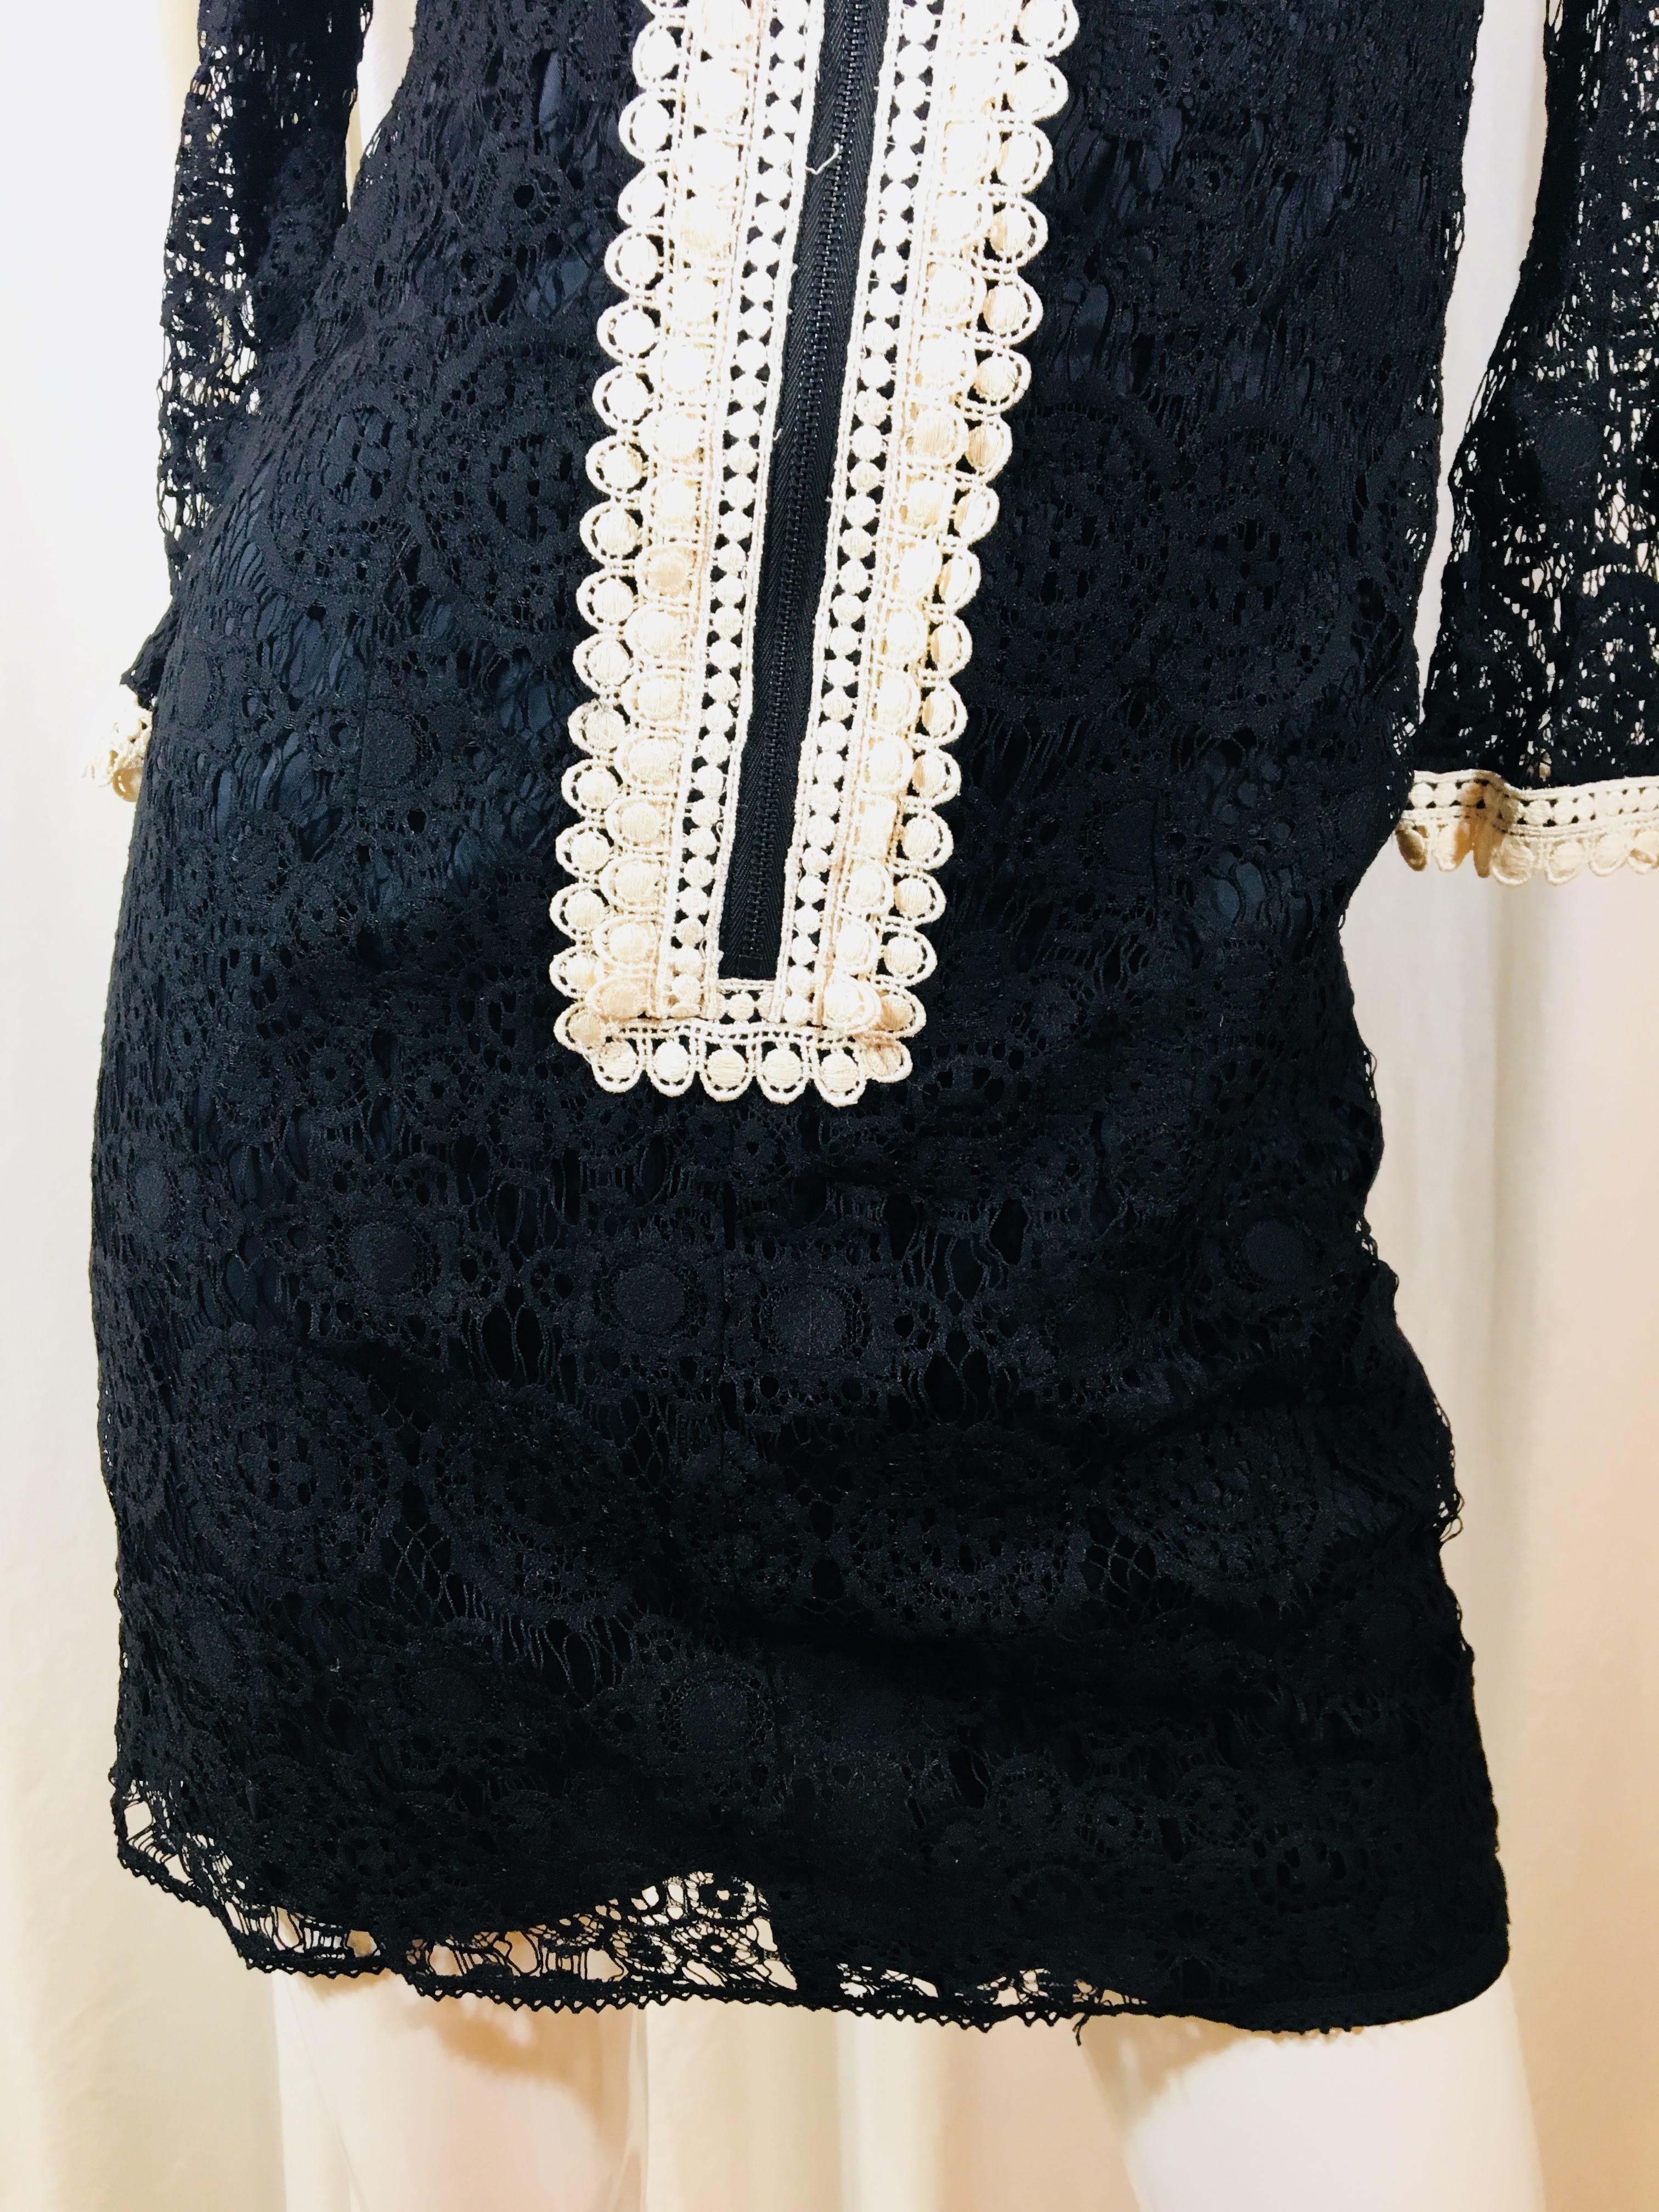 nanette lepore black lace dress